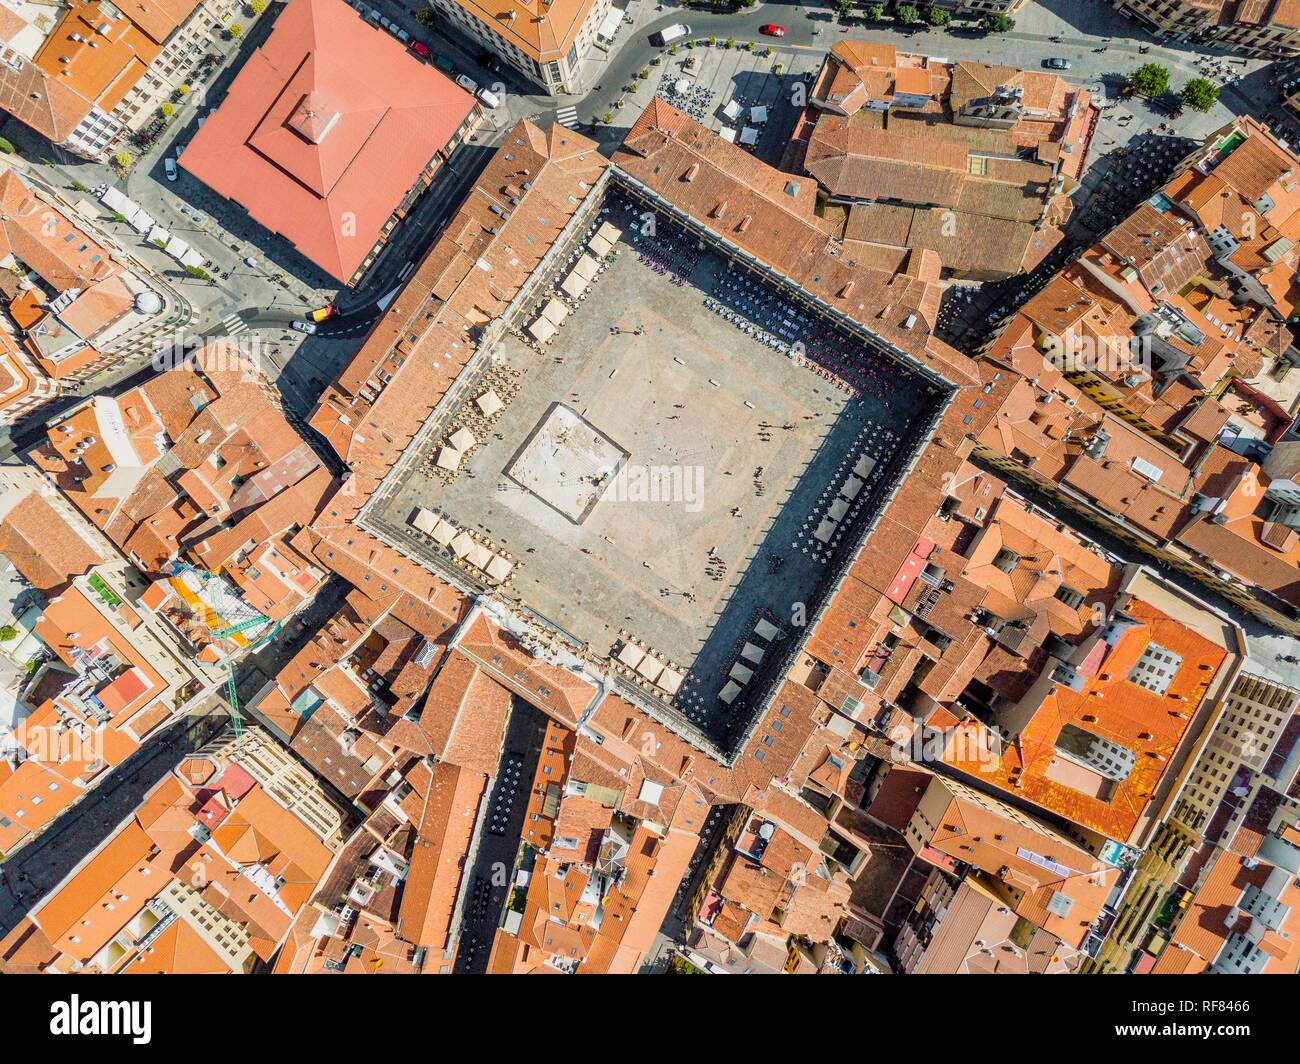 Main square called in Spanish Plaza Mayor, drone image, Salamanca, Spain Stock Photo